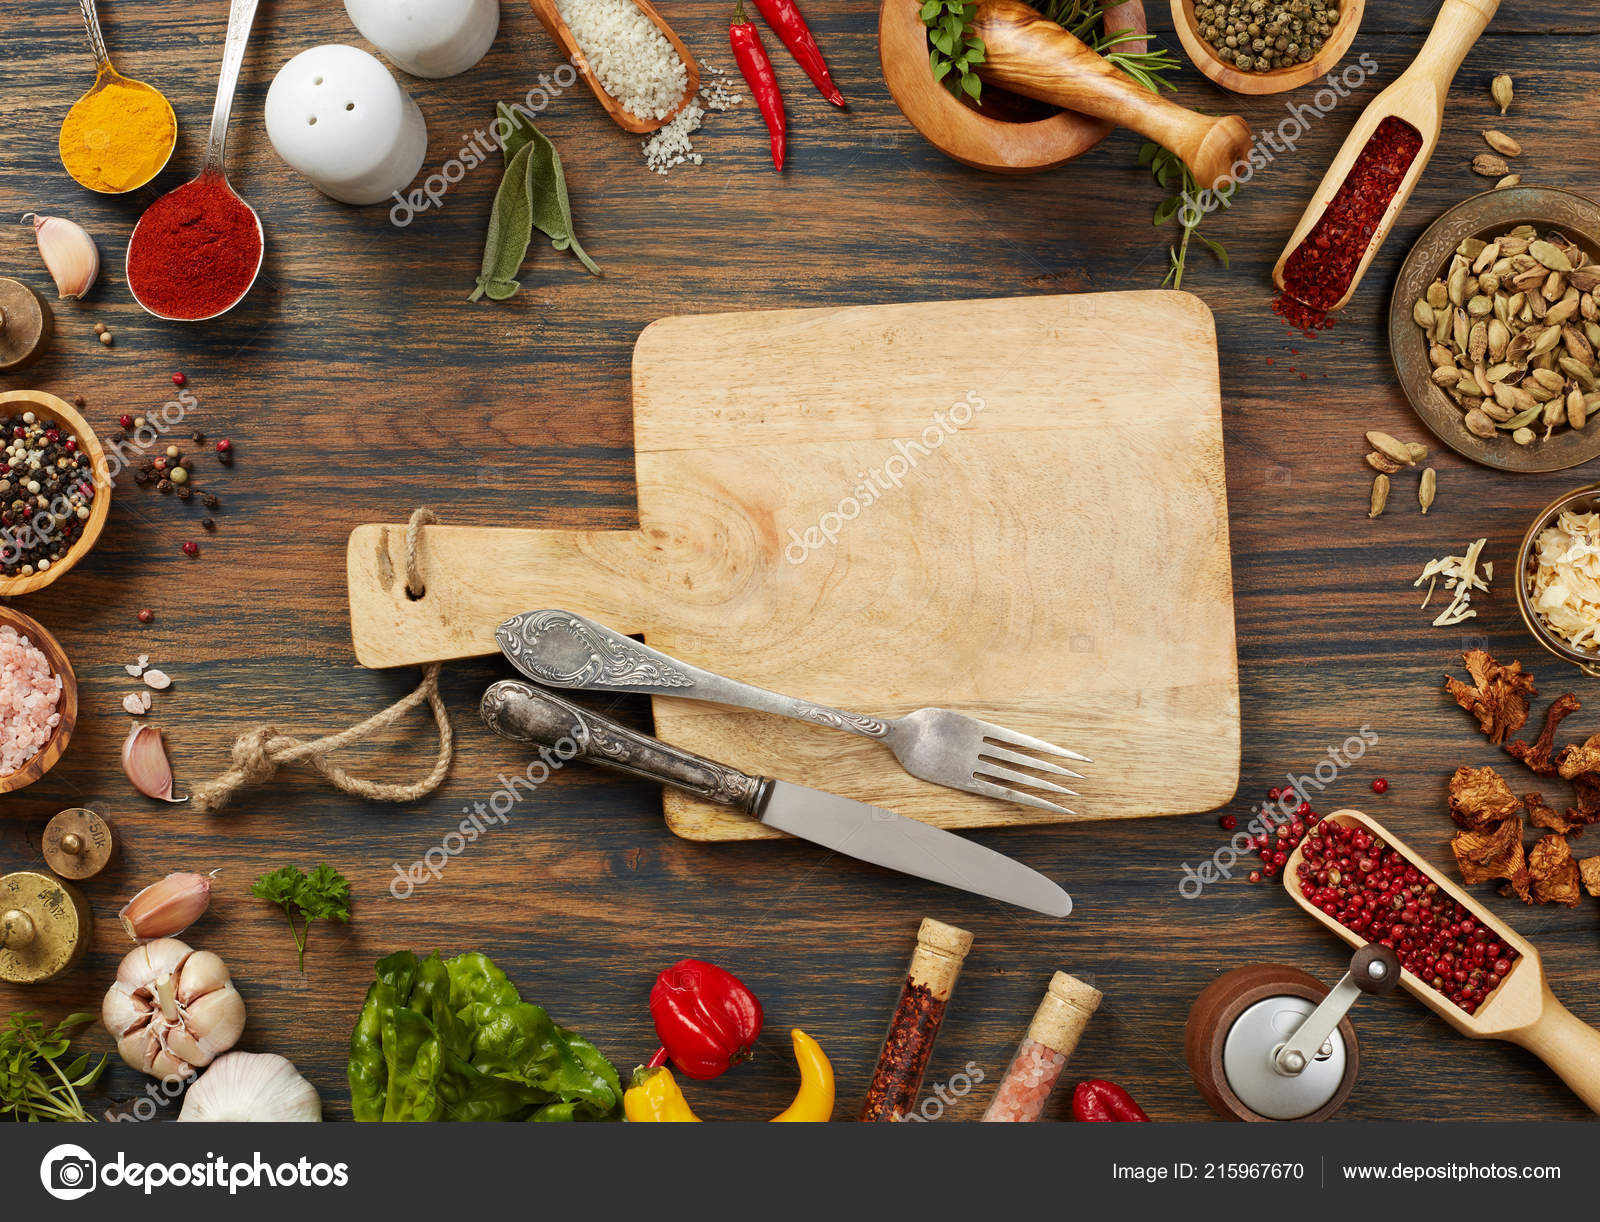 https://st4.depositphotos.com/6235482/21596/i/1600/depositphotos_215967670-stock-photo-cooking-ingredients-cutting-board.jpg